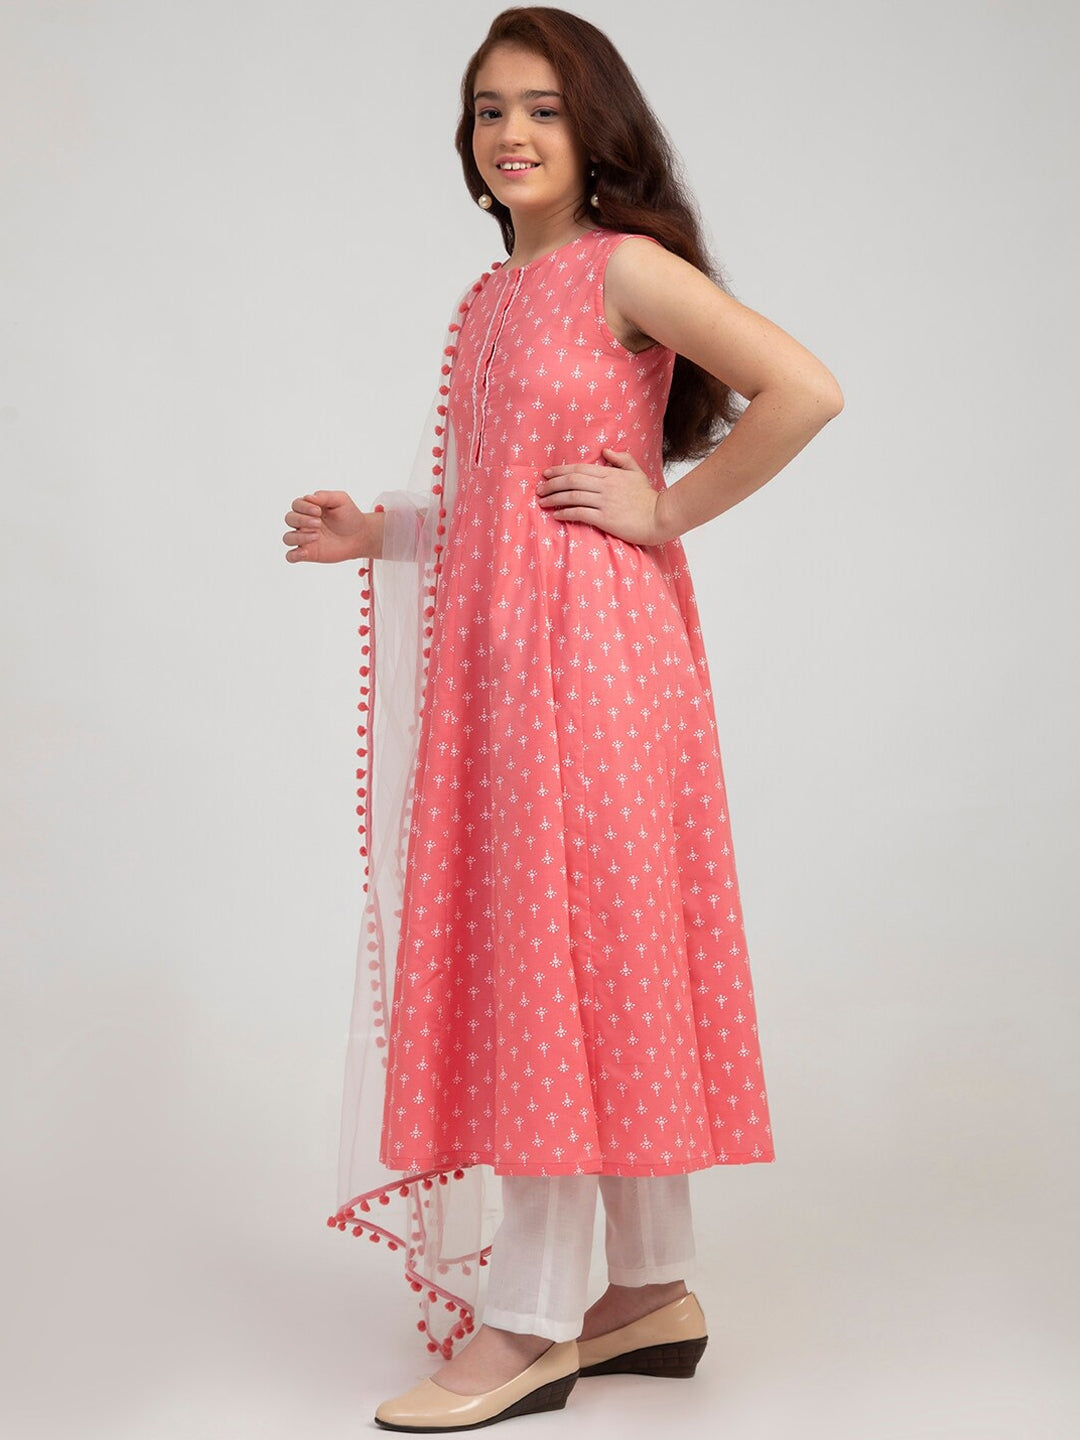 Girls Pink Ethnic Motifs Printed Pure Cotton Kurta with Trousers & With DupattaWomensFashionFun.com